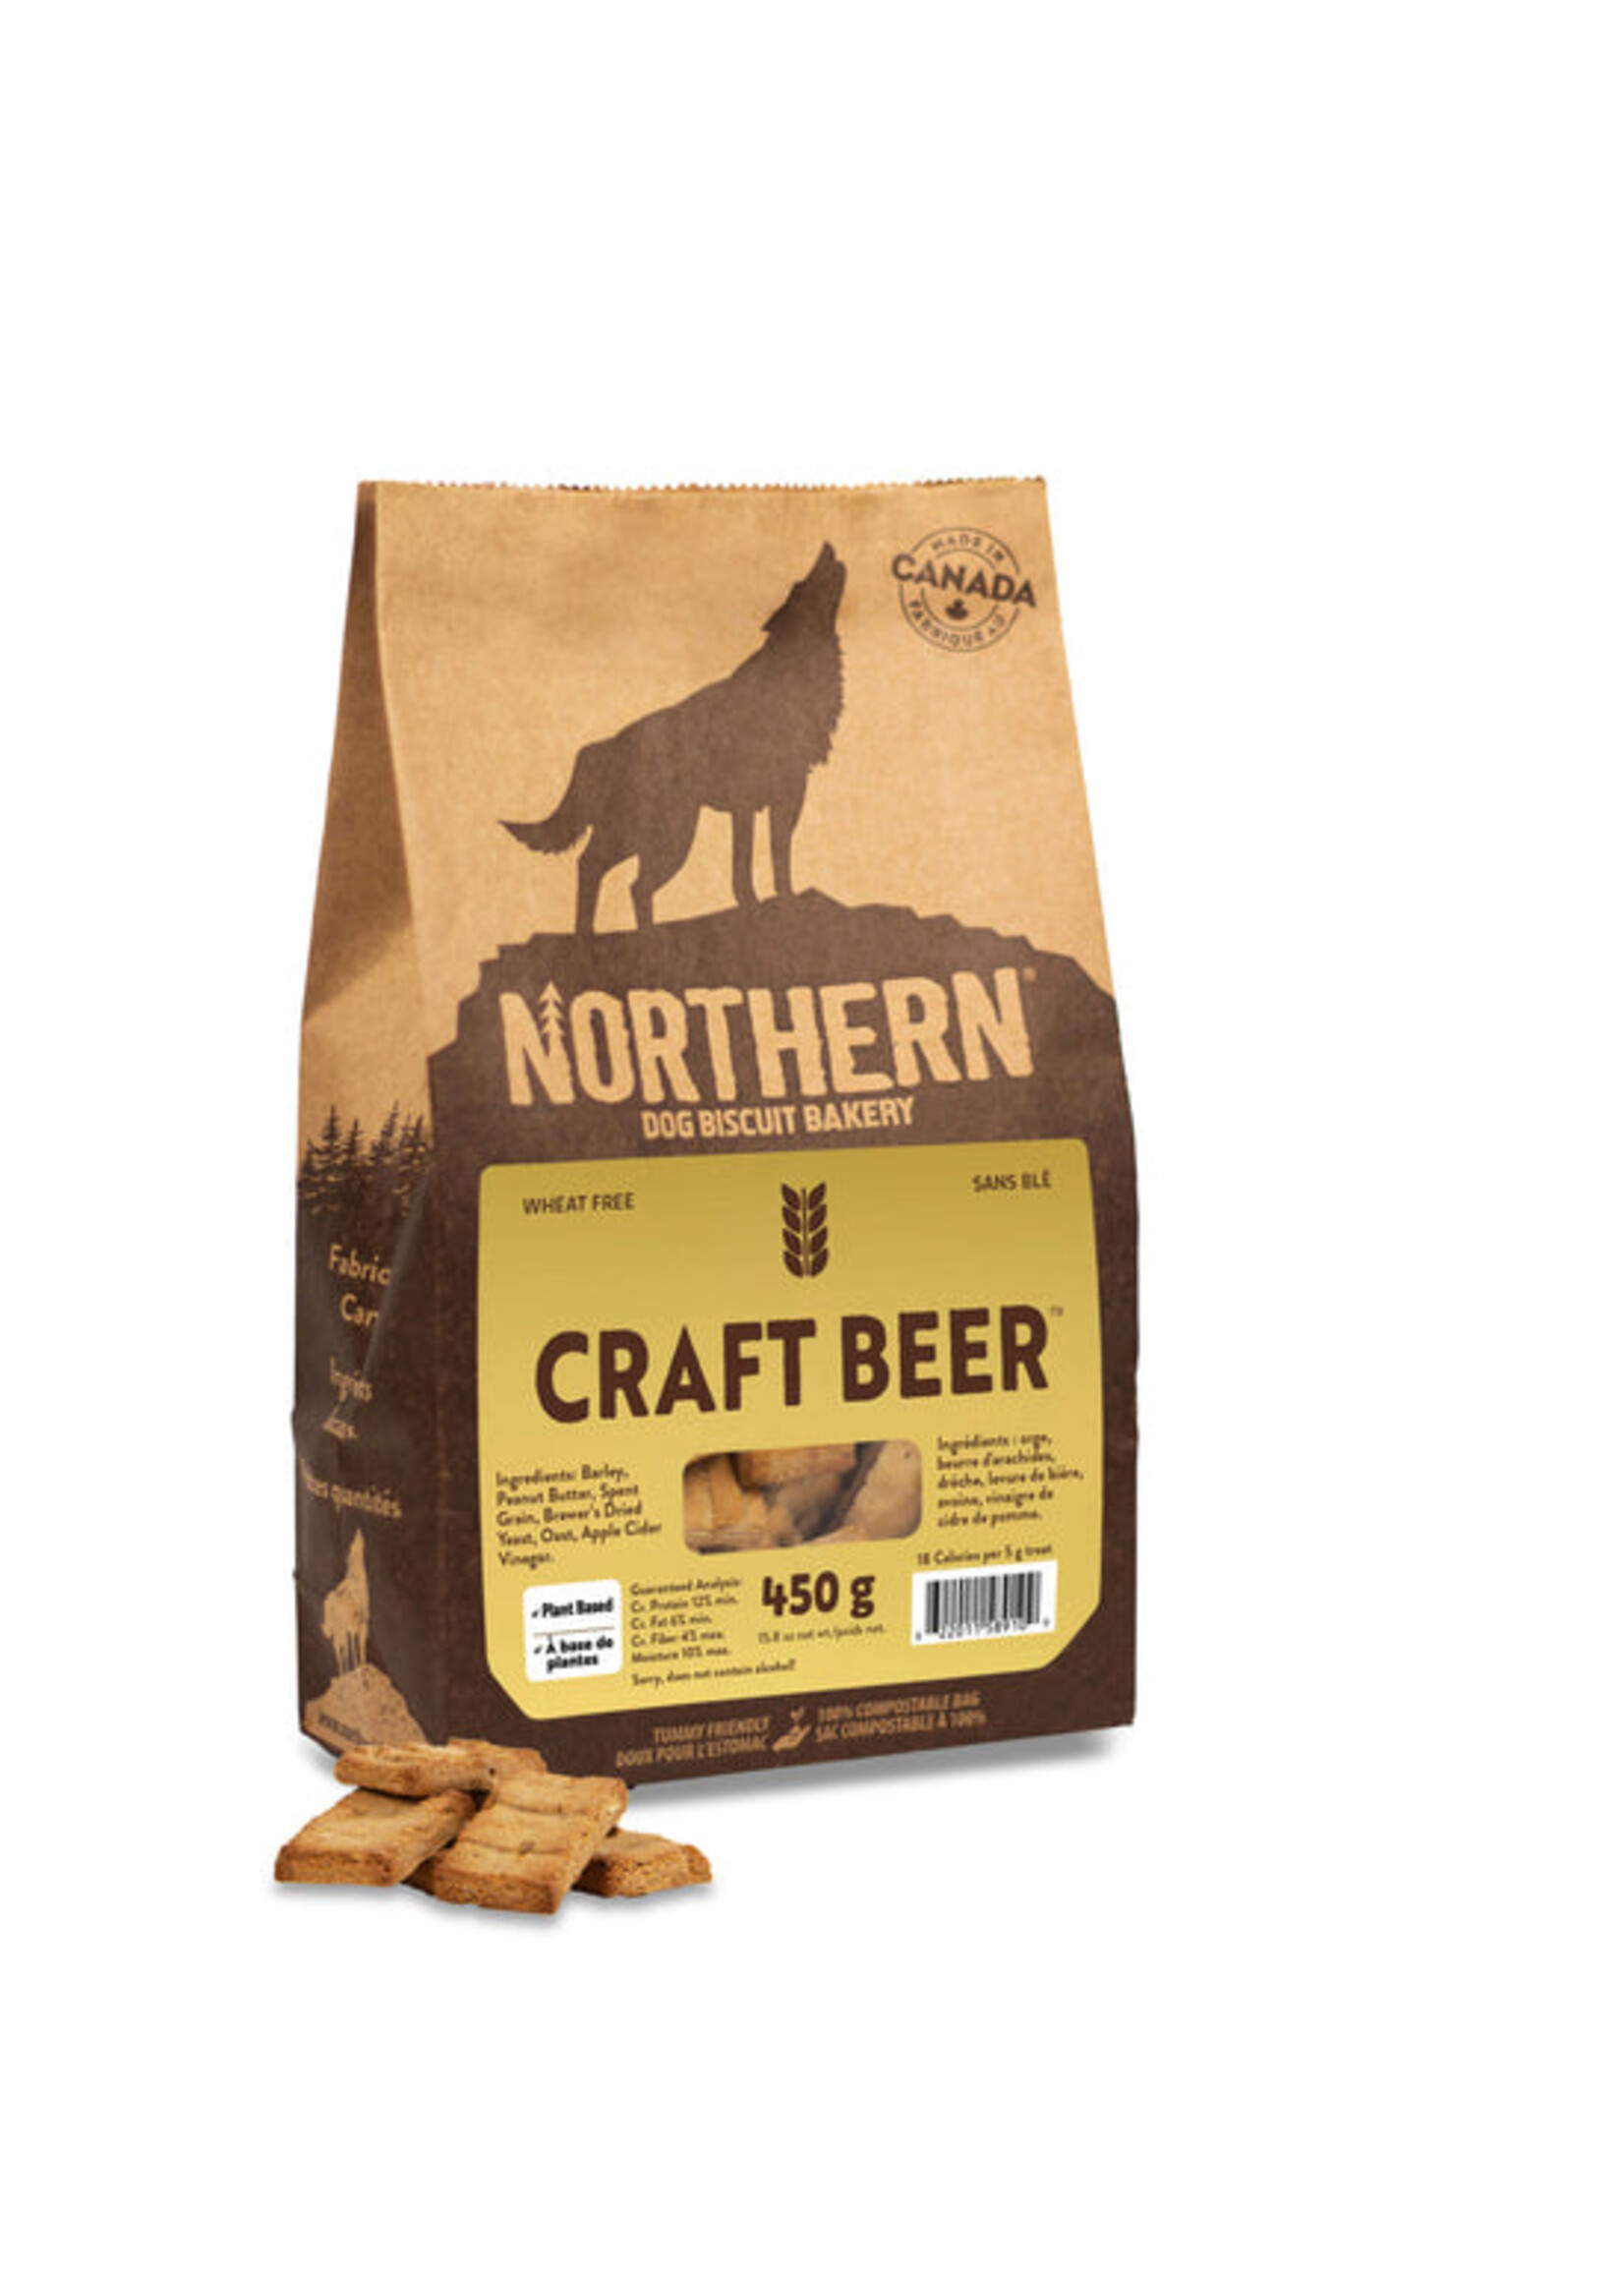 Northern Biscuit WF Craft Beer Snack 450 g / 15.9 oz